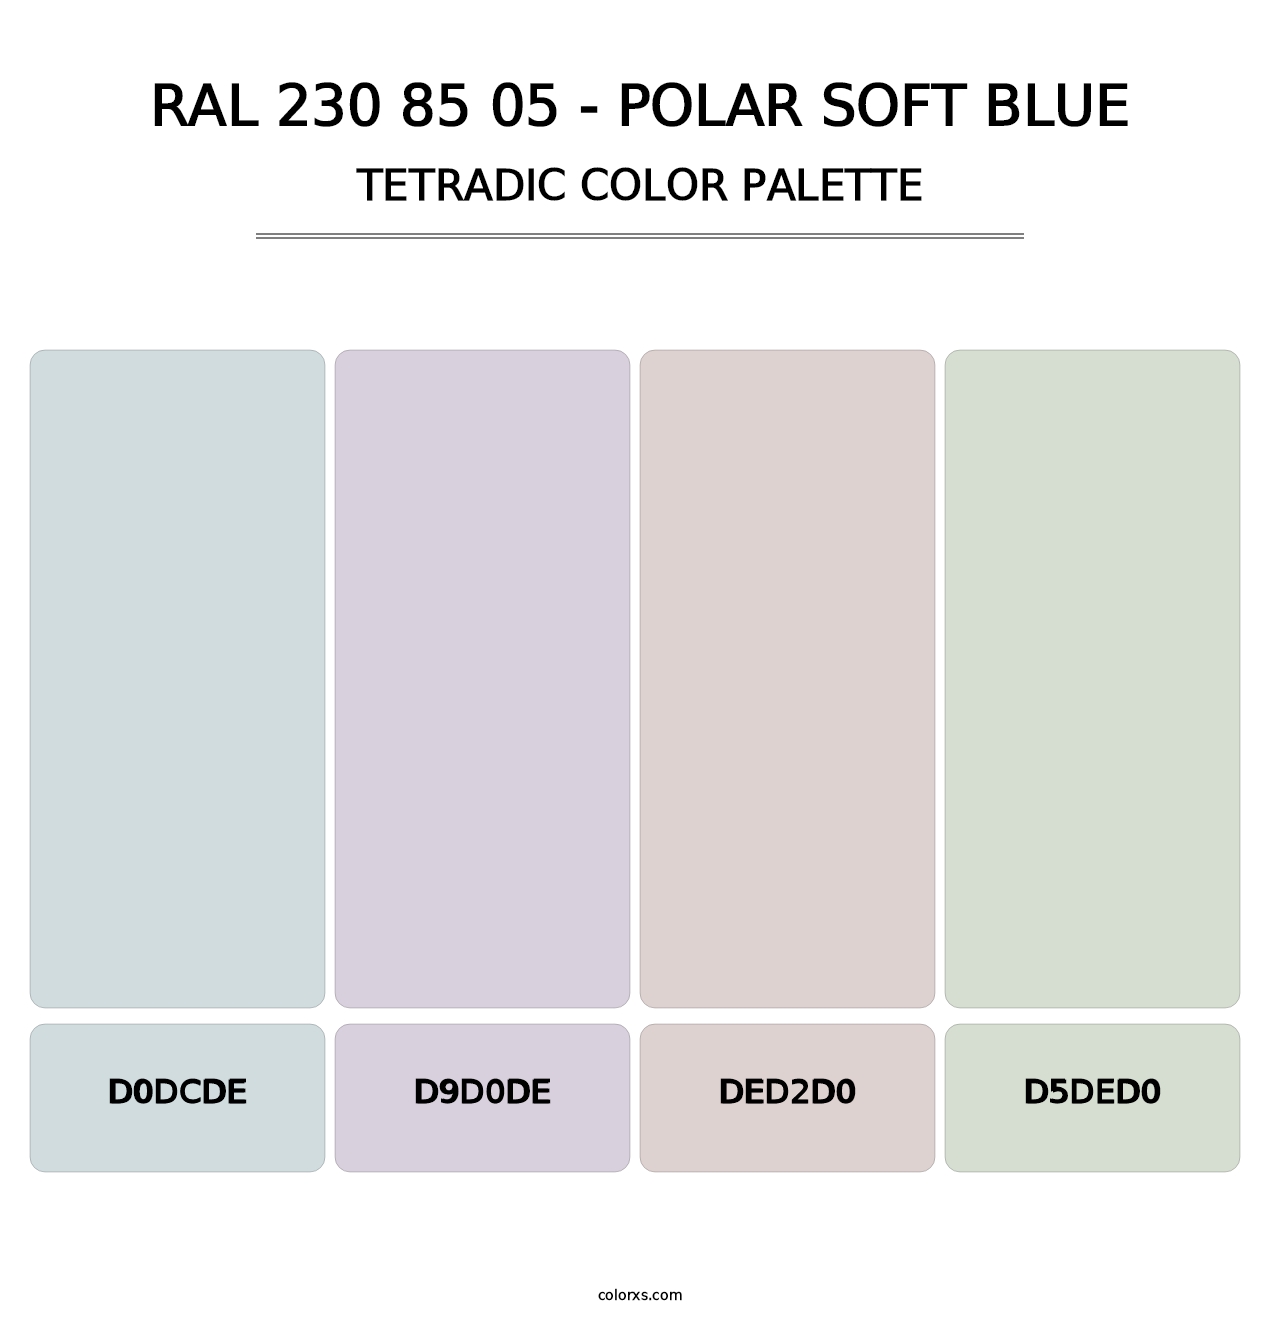 RAL 230 85 05 - Polar Soft Blue - Tetradic Color Palette